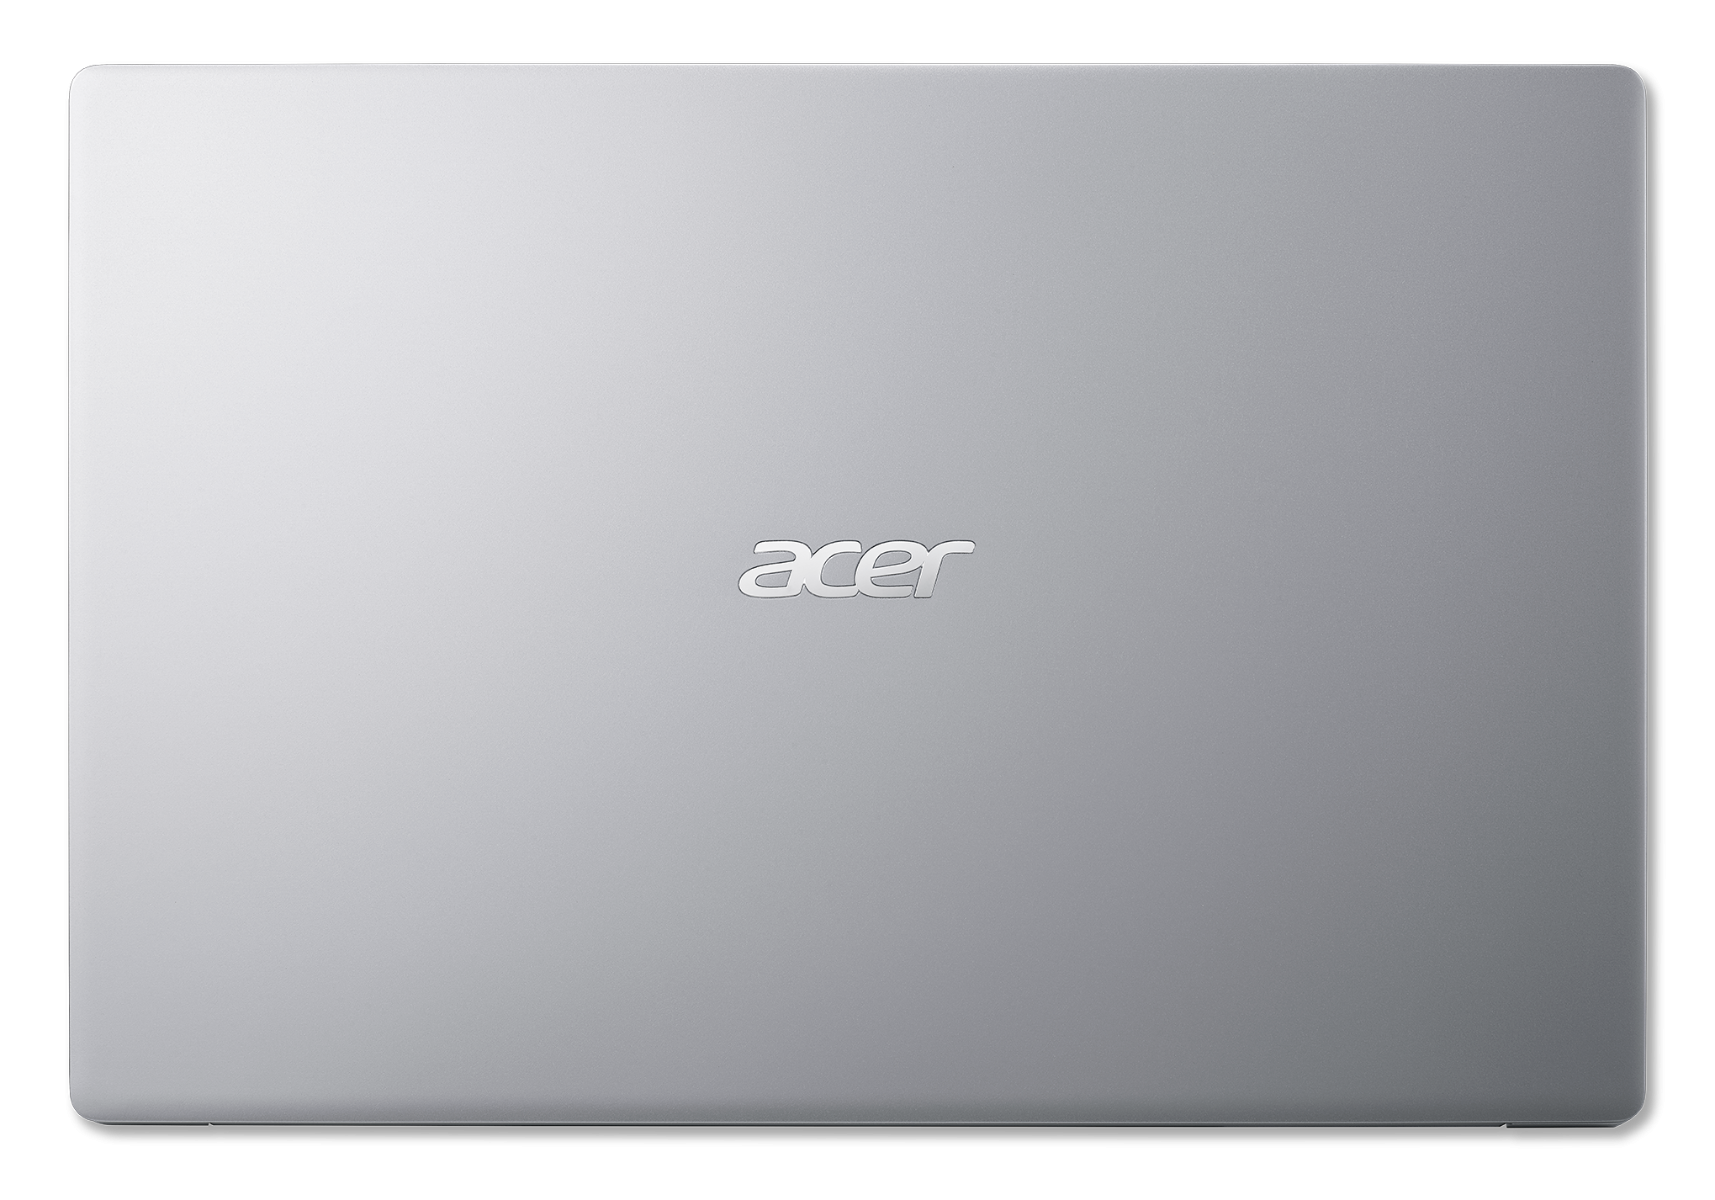 ACER SWIFT 3 SF314-43-R2Q8 14&#8221; FHD |R7 5700U|16GB OB|512GB SSD LAPTOP